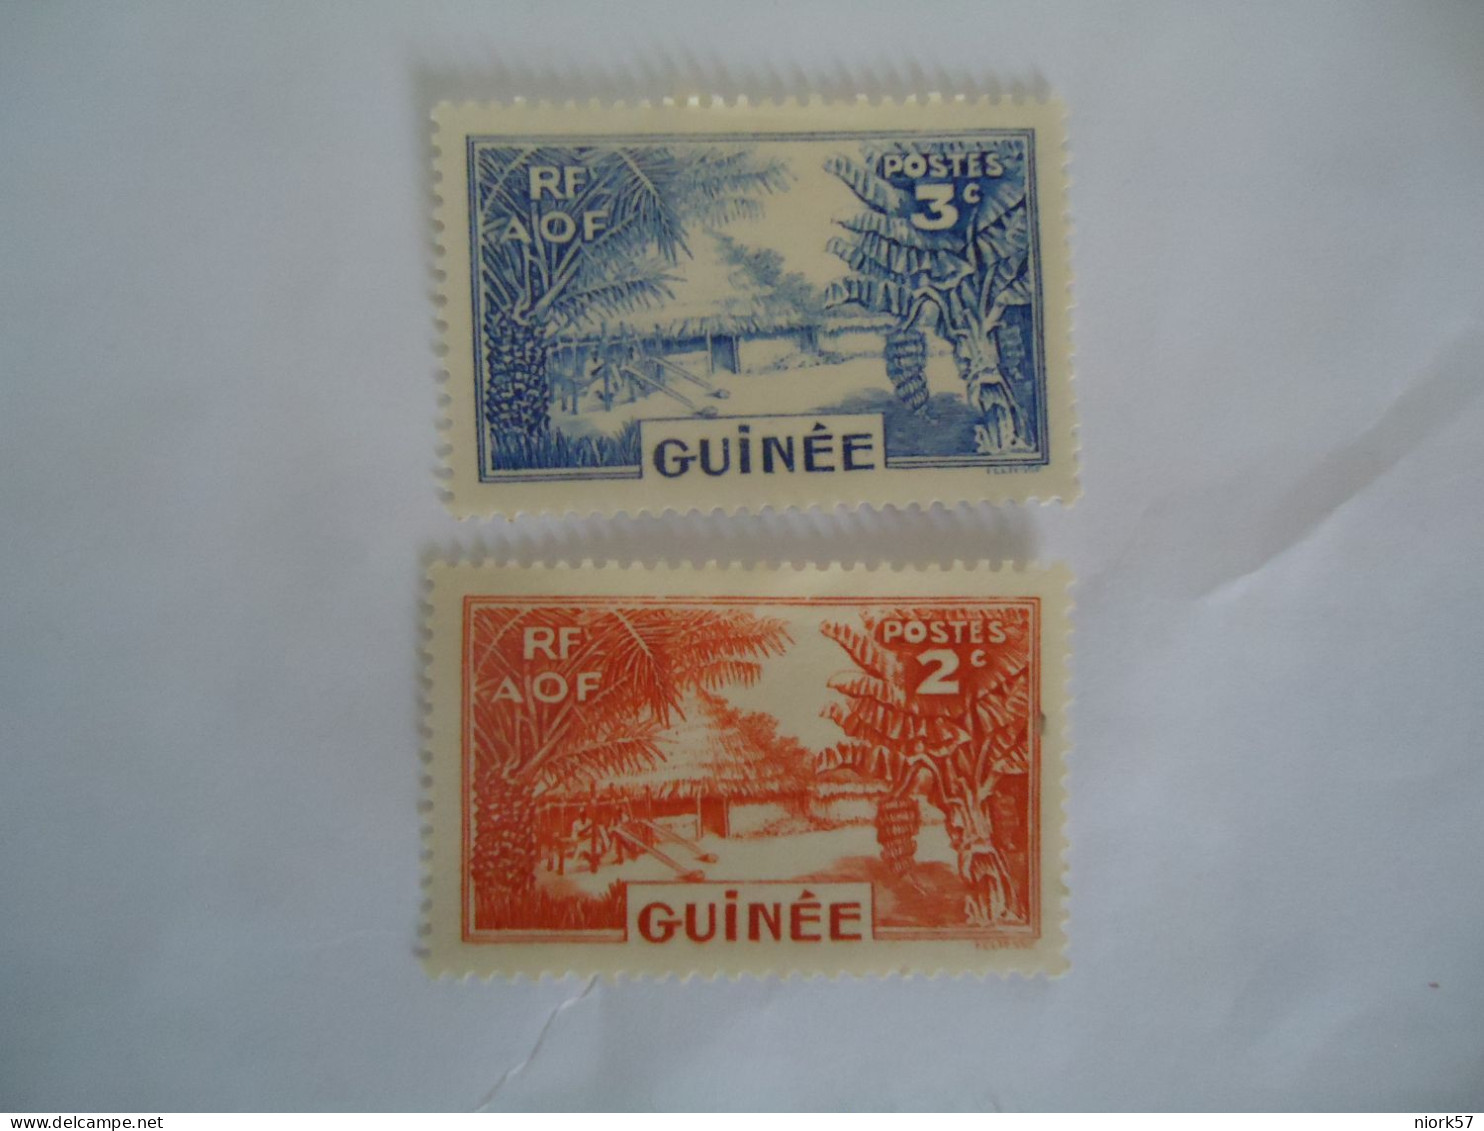 GUINEE  GUINEA  MLN STAMPS 2 LANDSCAPES - Guinée (1958-...)